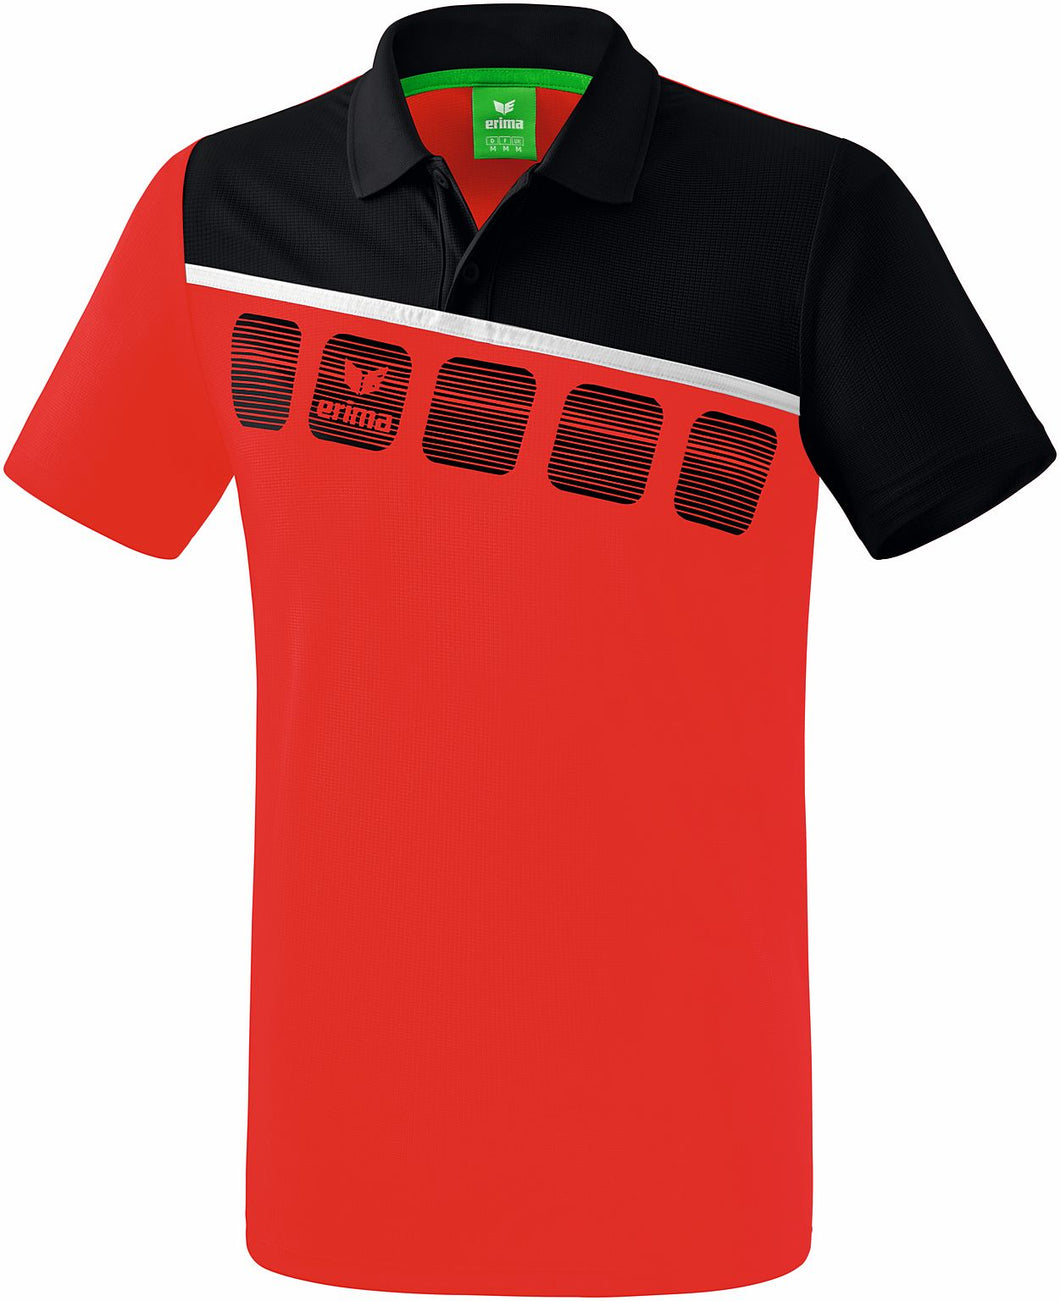 Outlet str. Medium Teamline 5-C polo-shirt